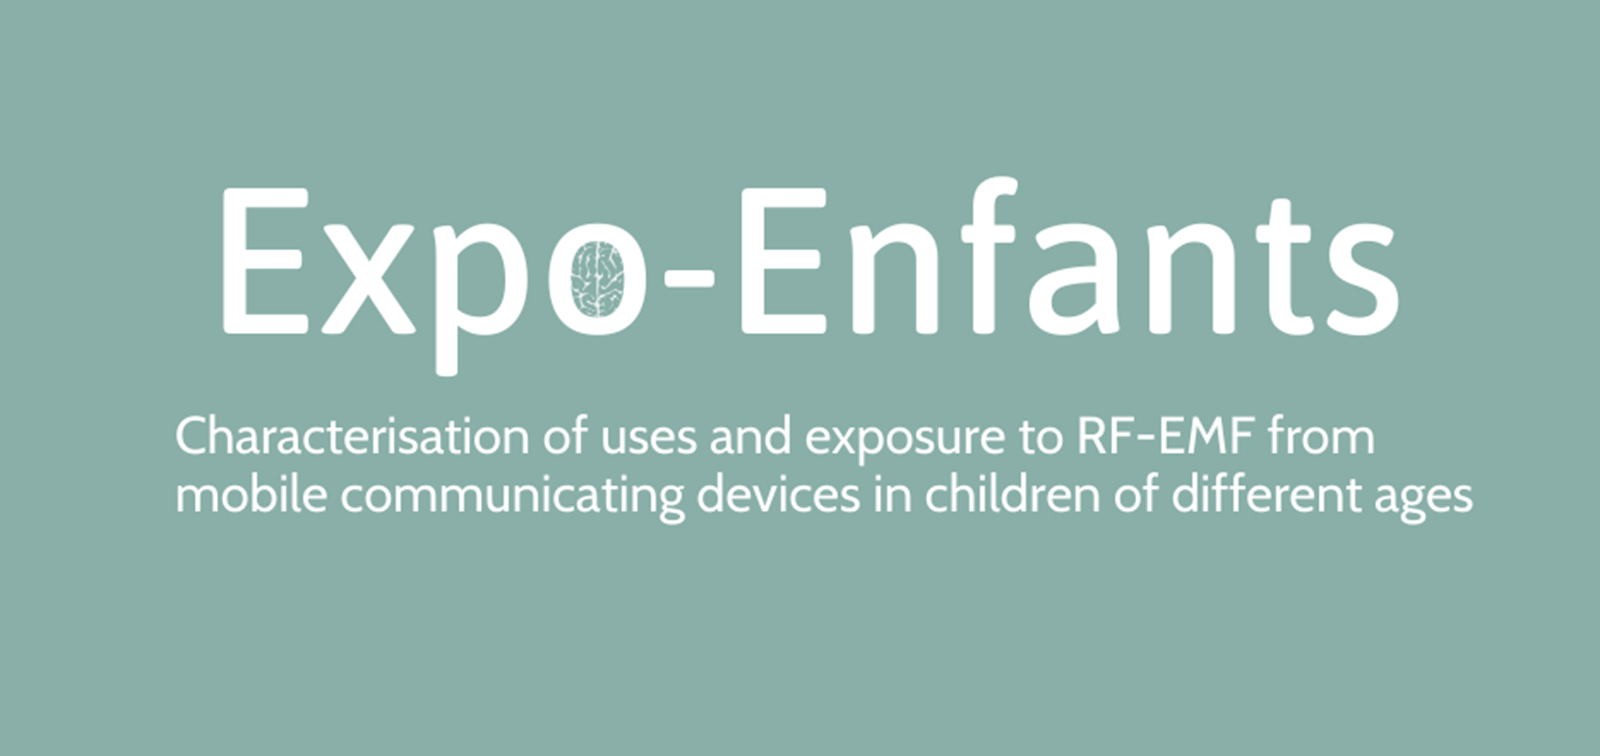 EXPO-ENFANTS project